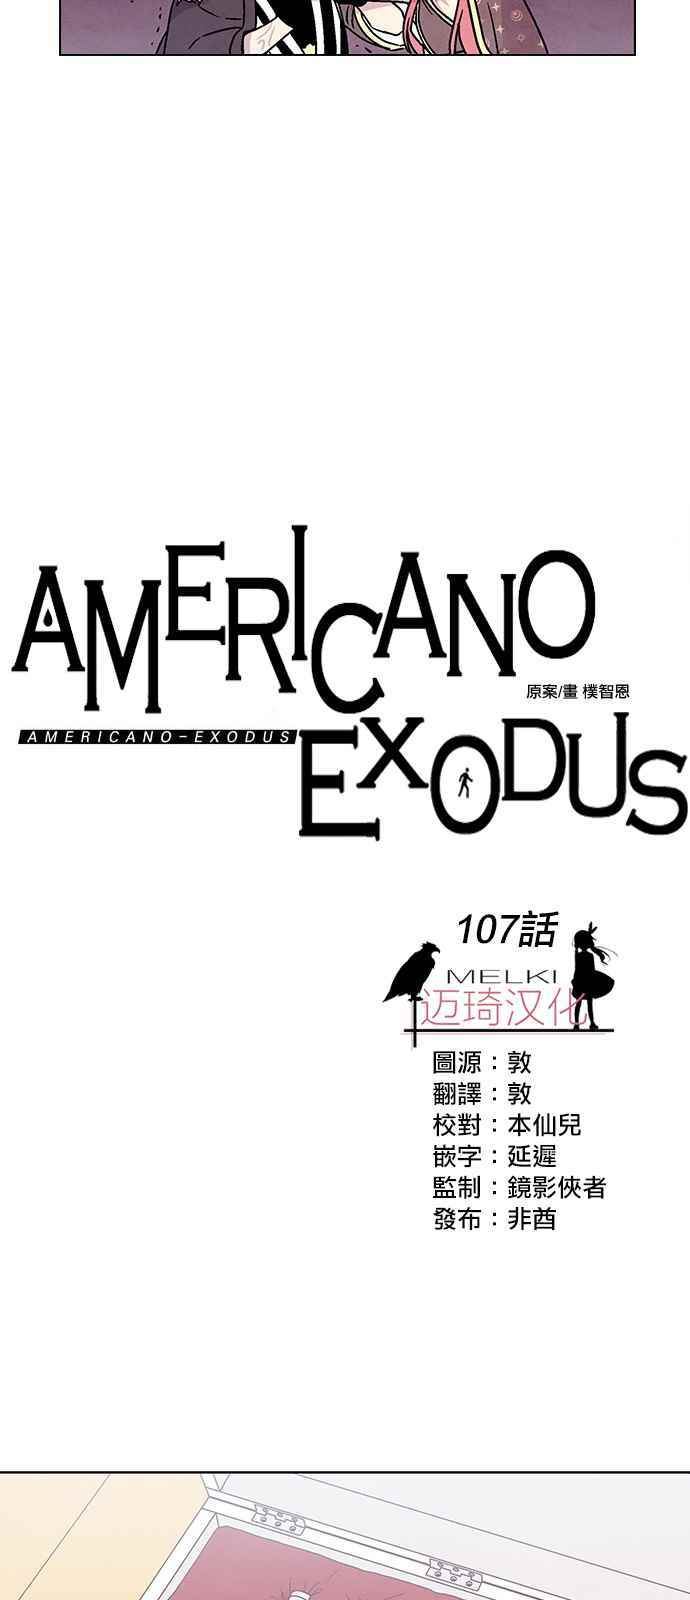 《Americano-exodus》漫画 exodus 107集